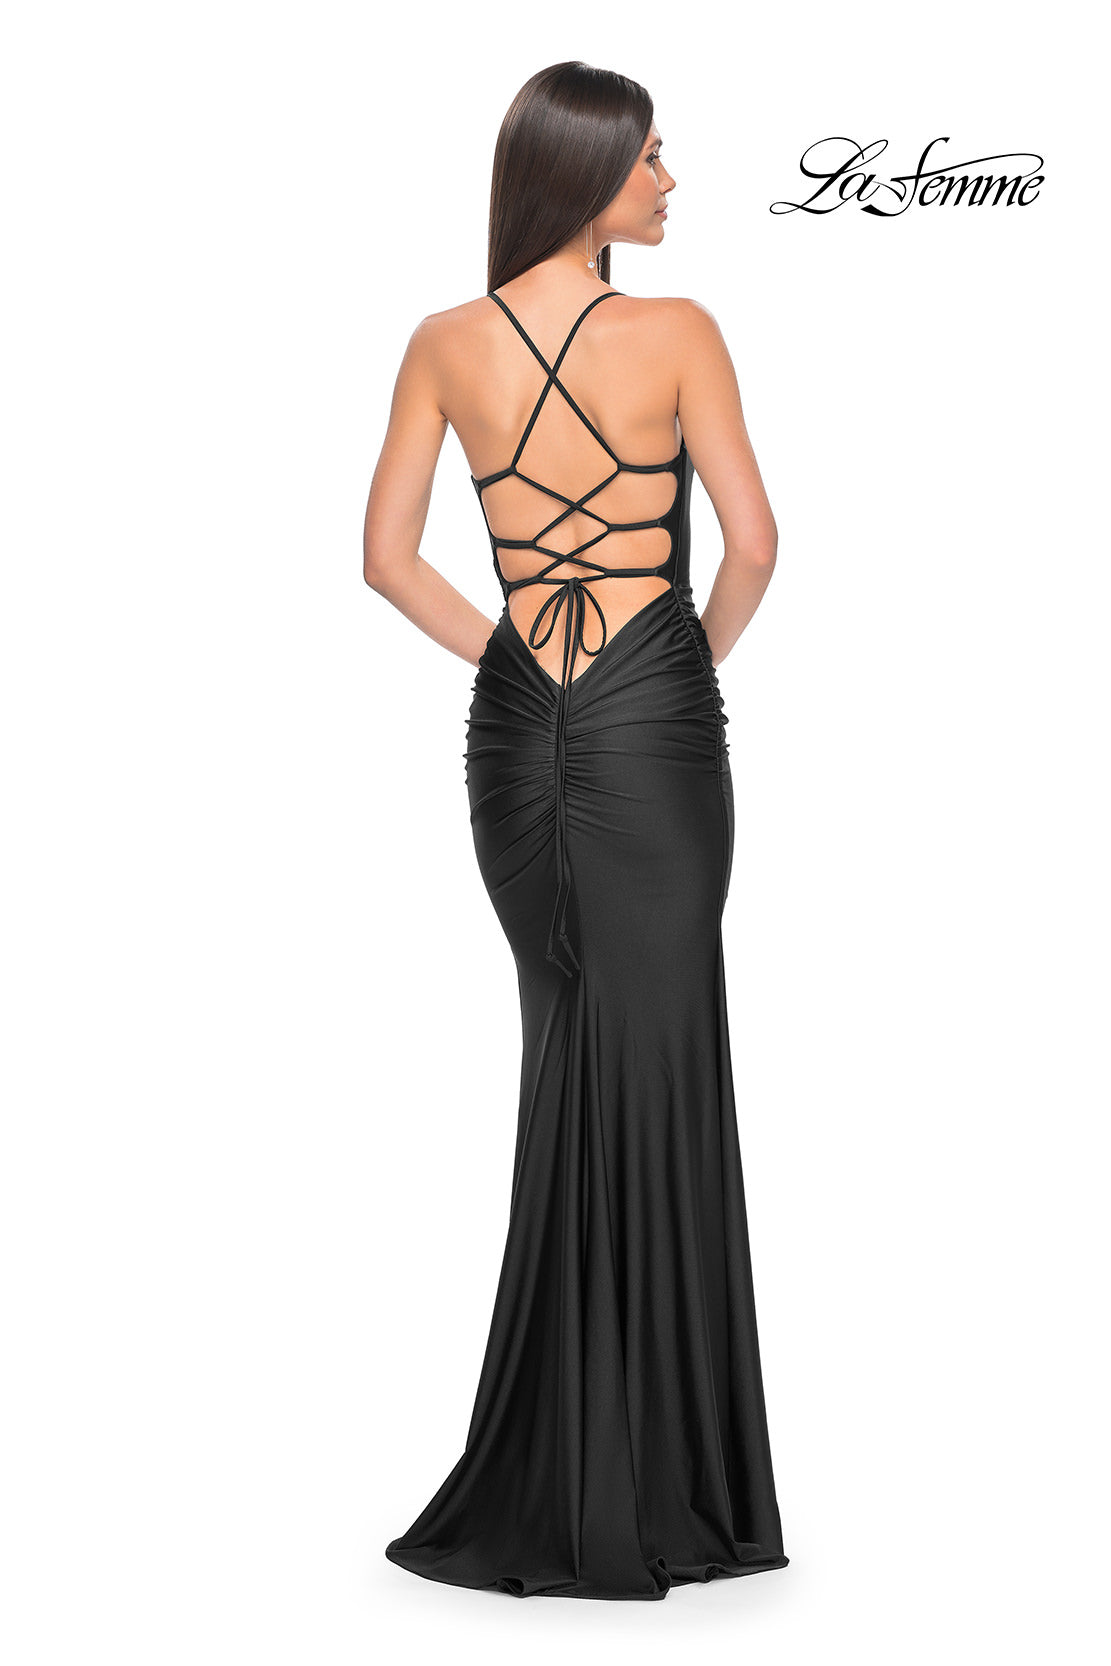 La Femme 31618 V-Neck Neckline Criss Cross Back Plain Jersey Column Fitted Evening Dress